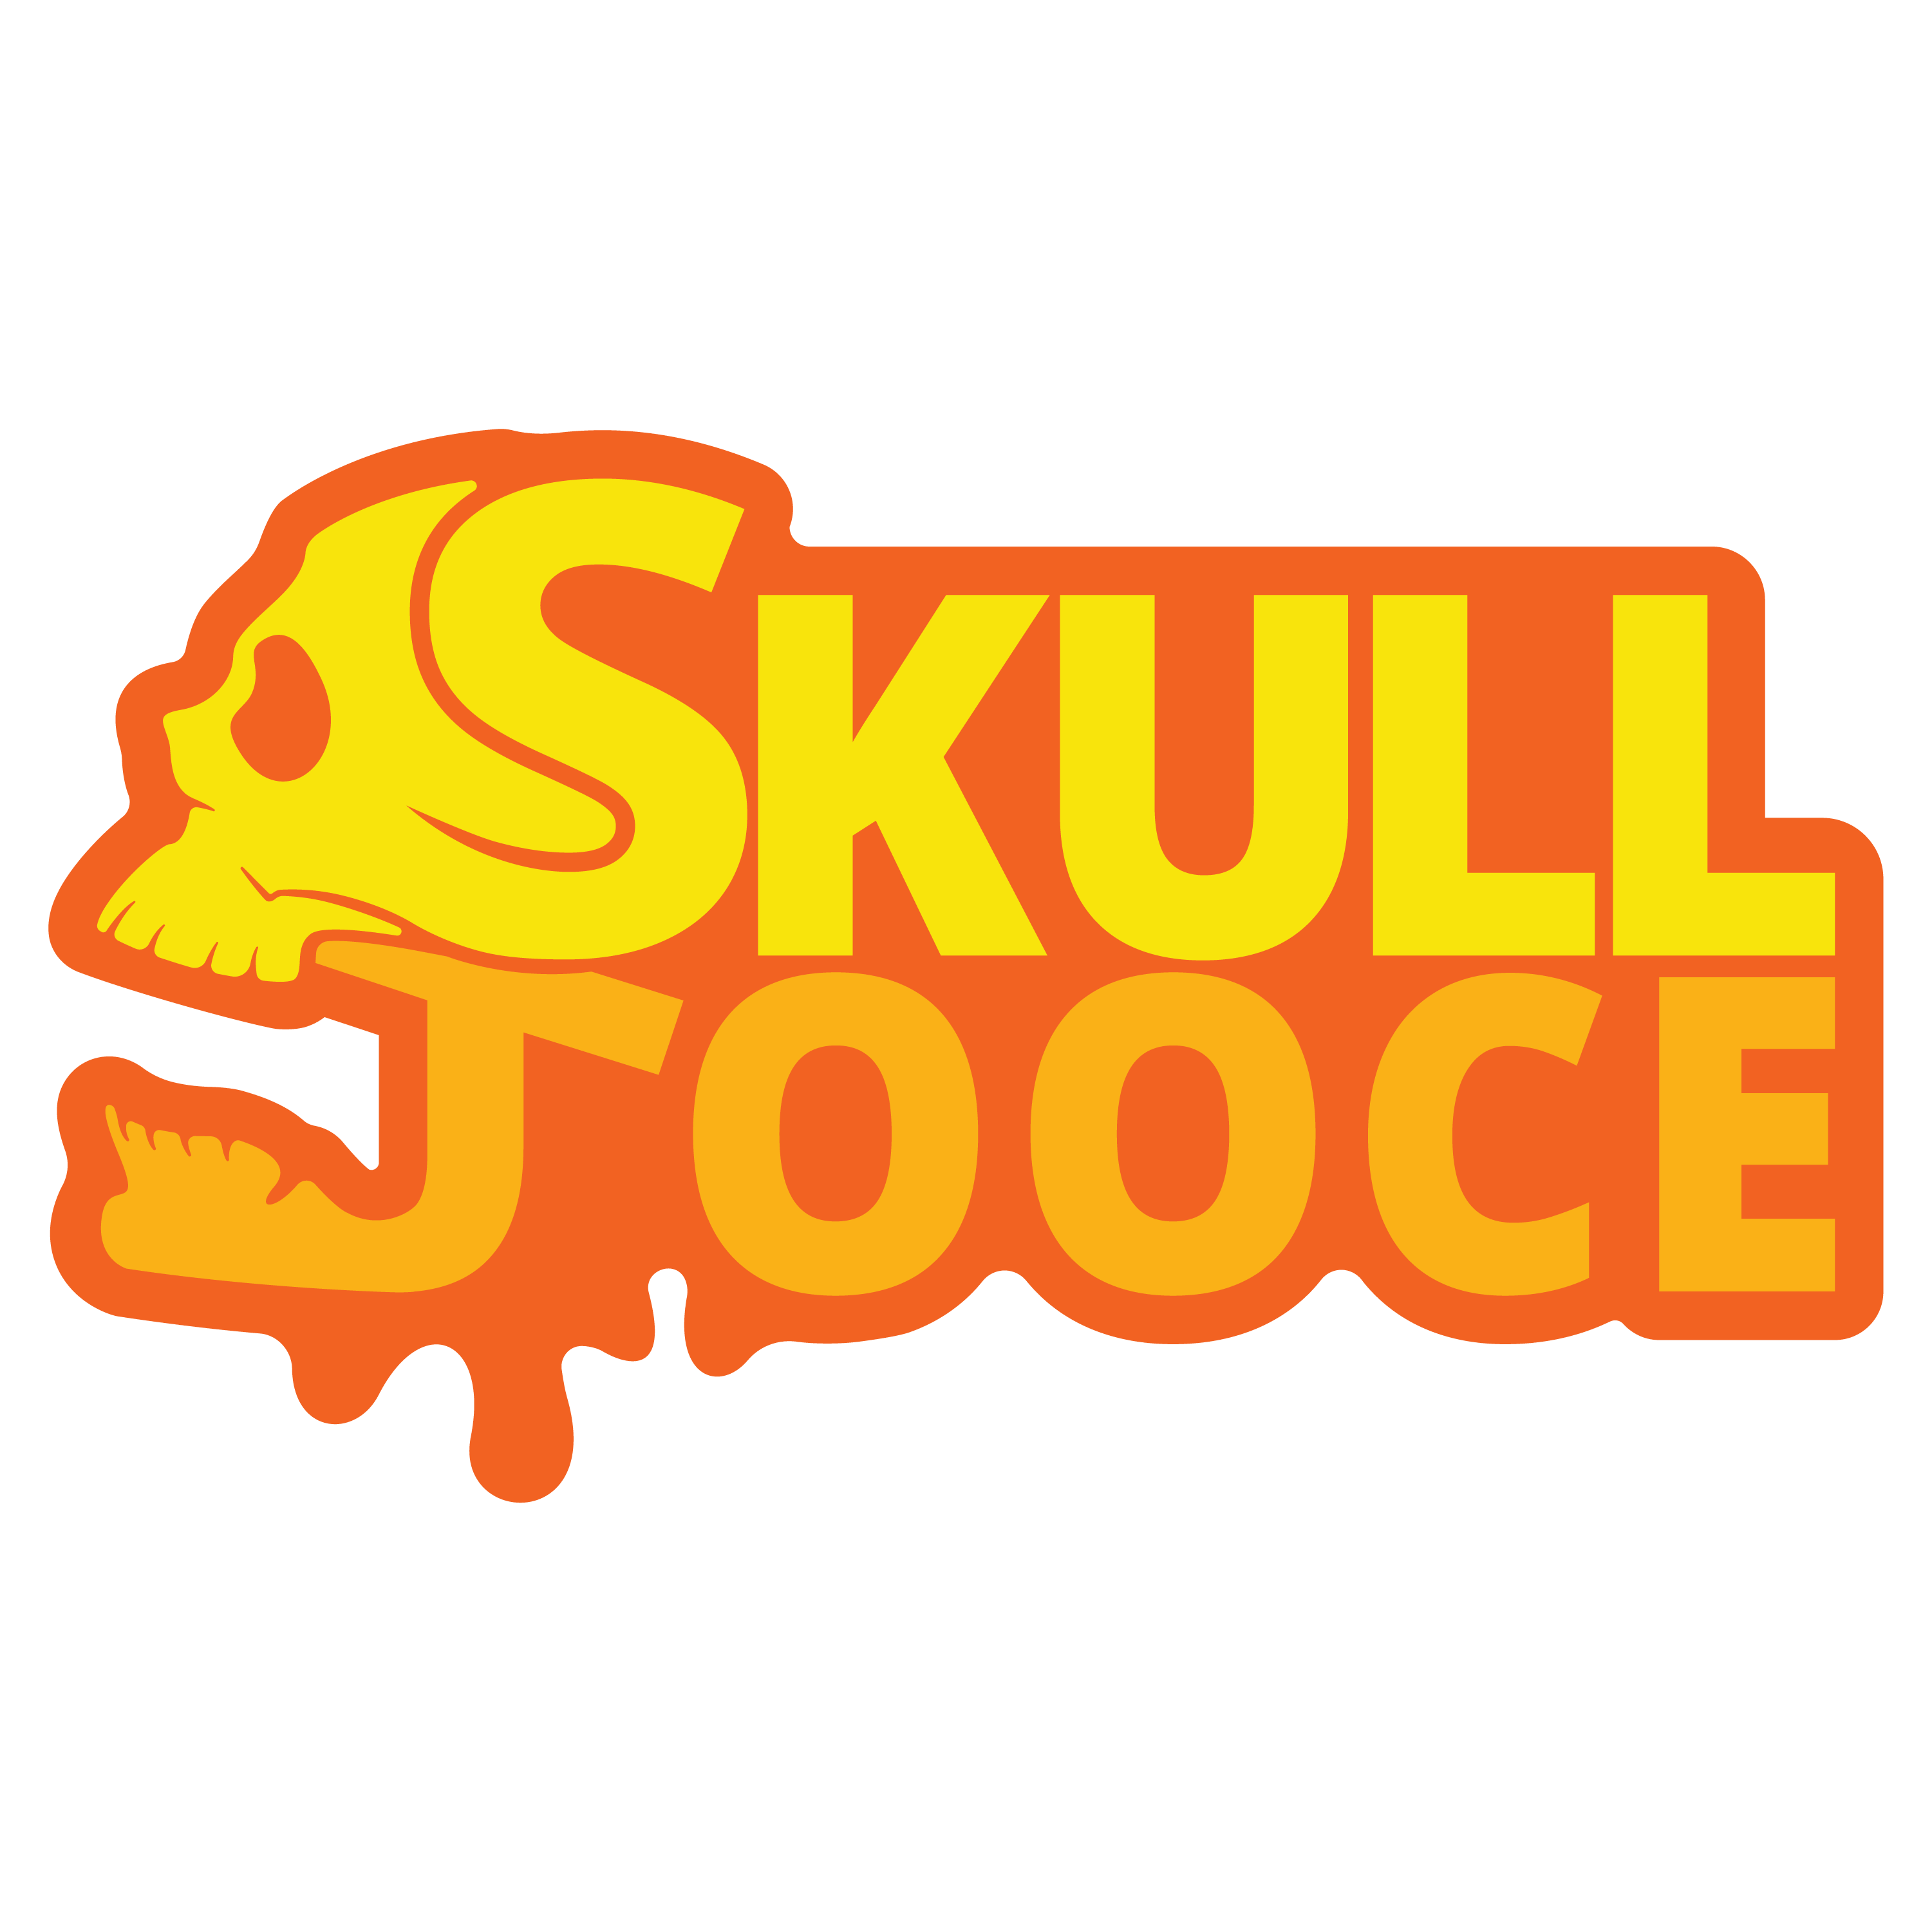 New SkullJooce Logo